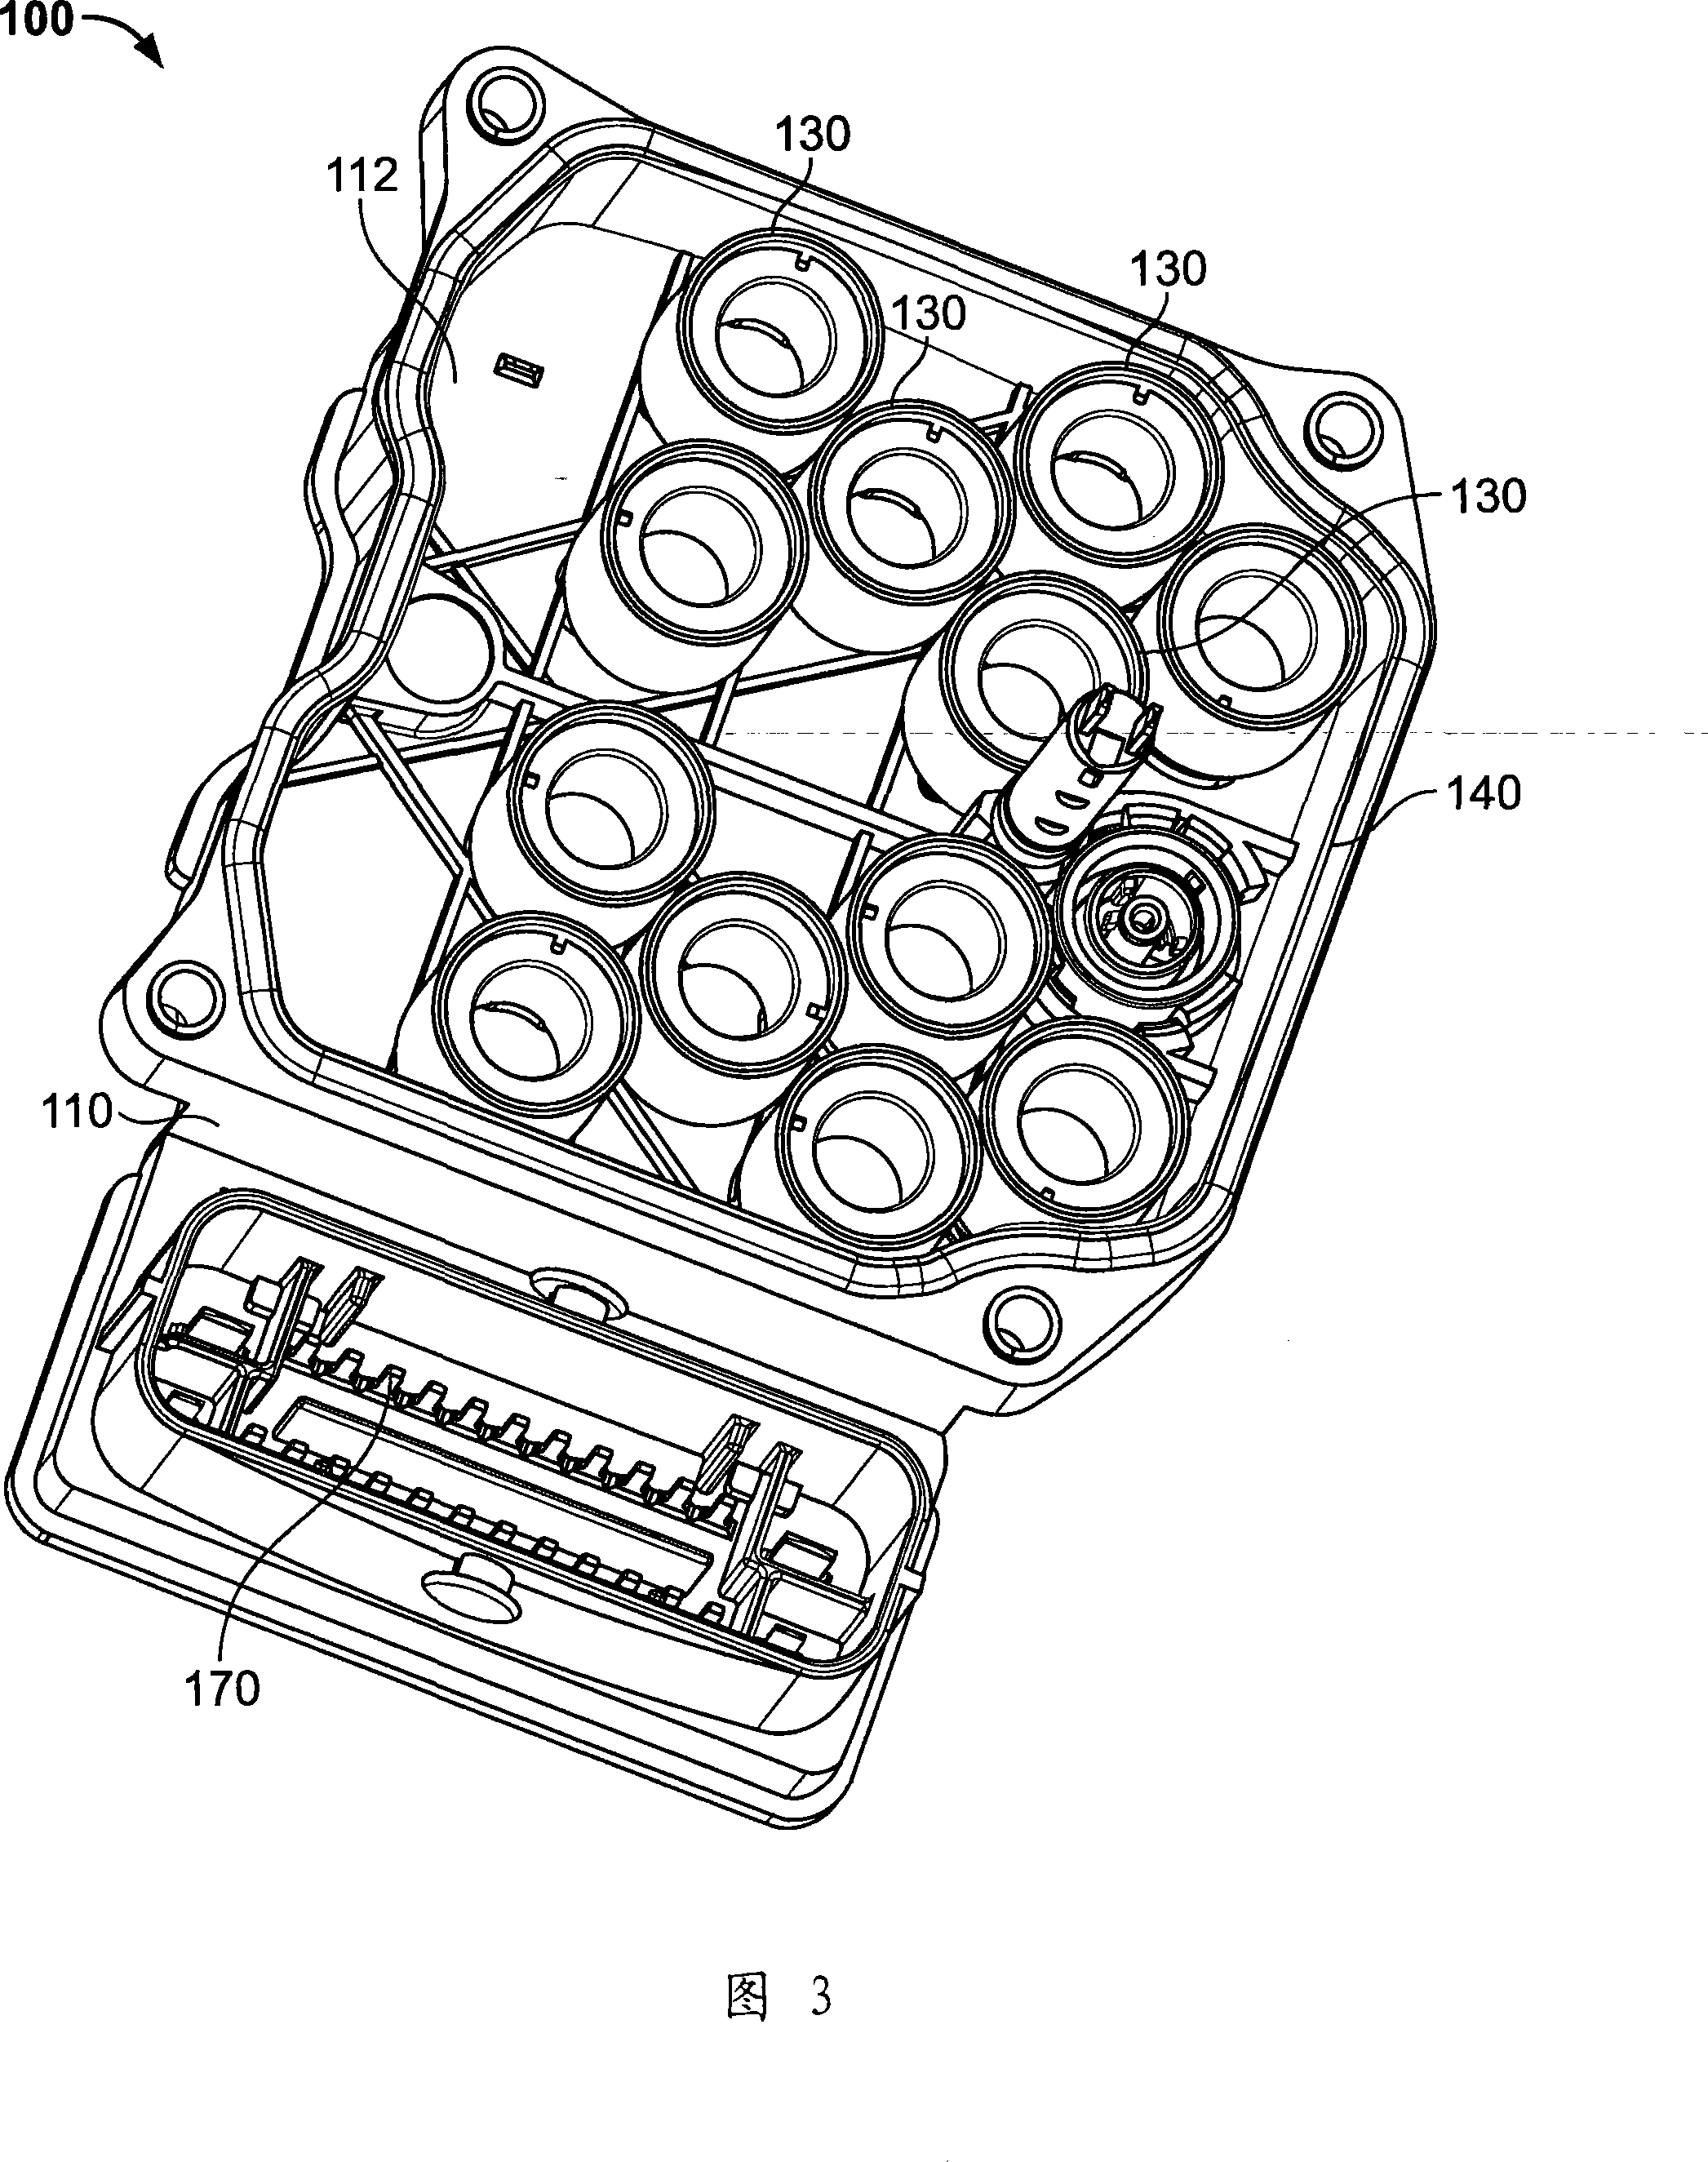 Solenoid valve controller